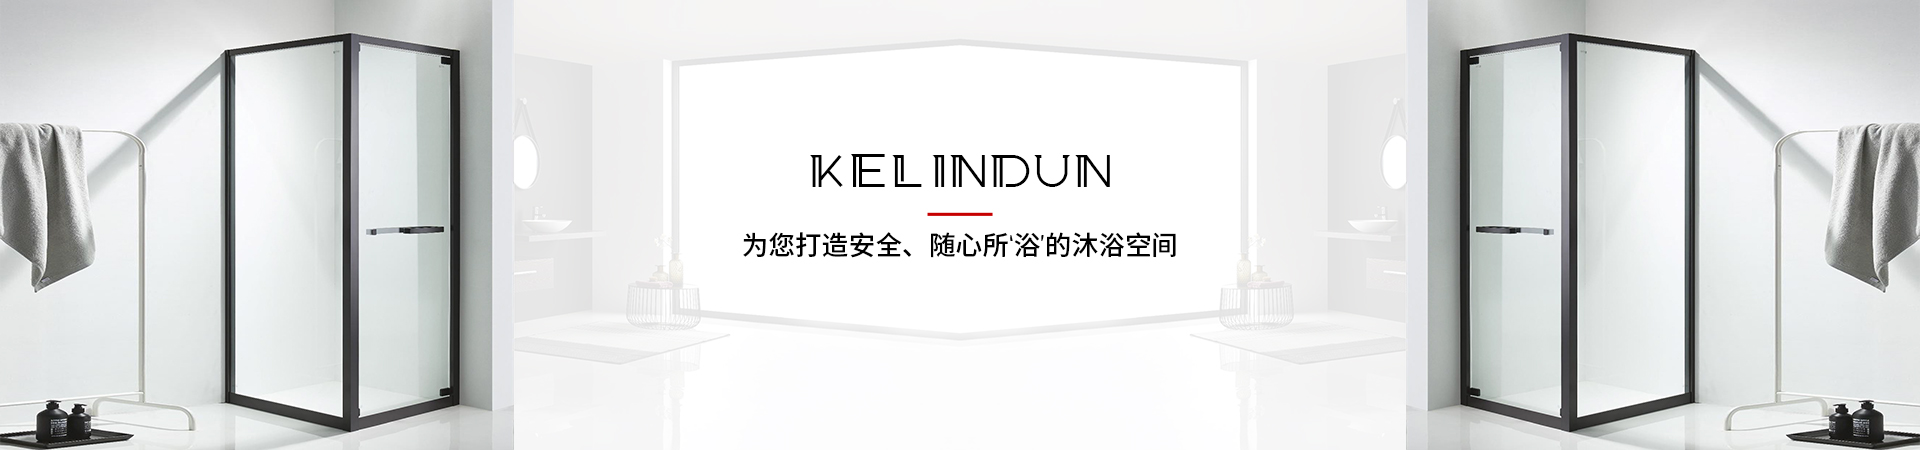 https://www.kelindun.com.cn/data/upload/202011/20201111143144_936.jpg